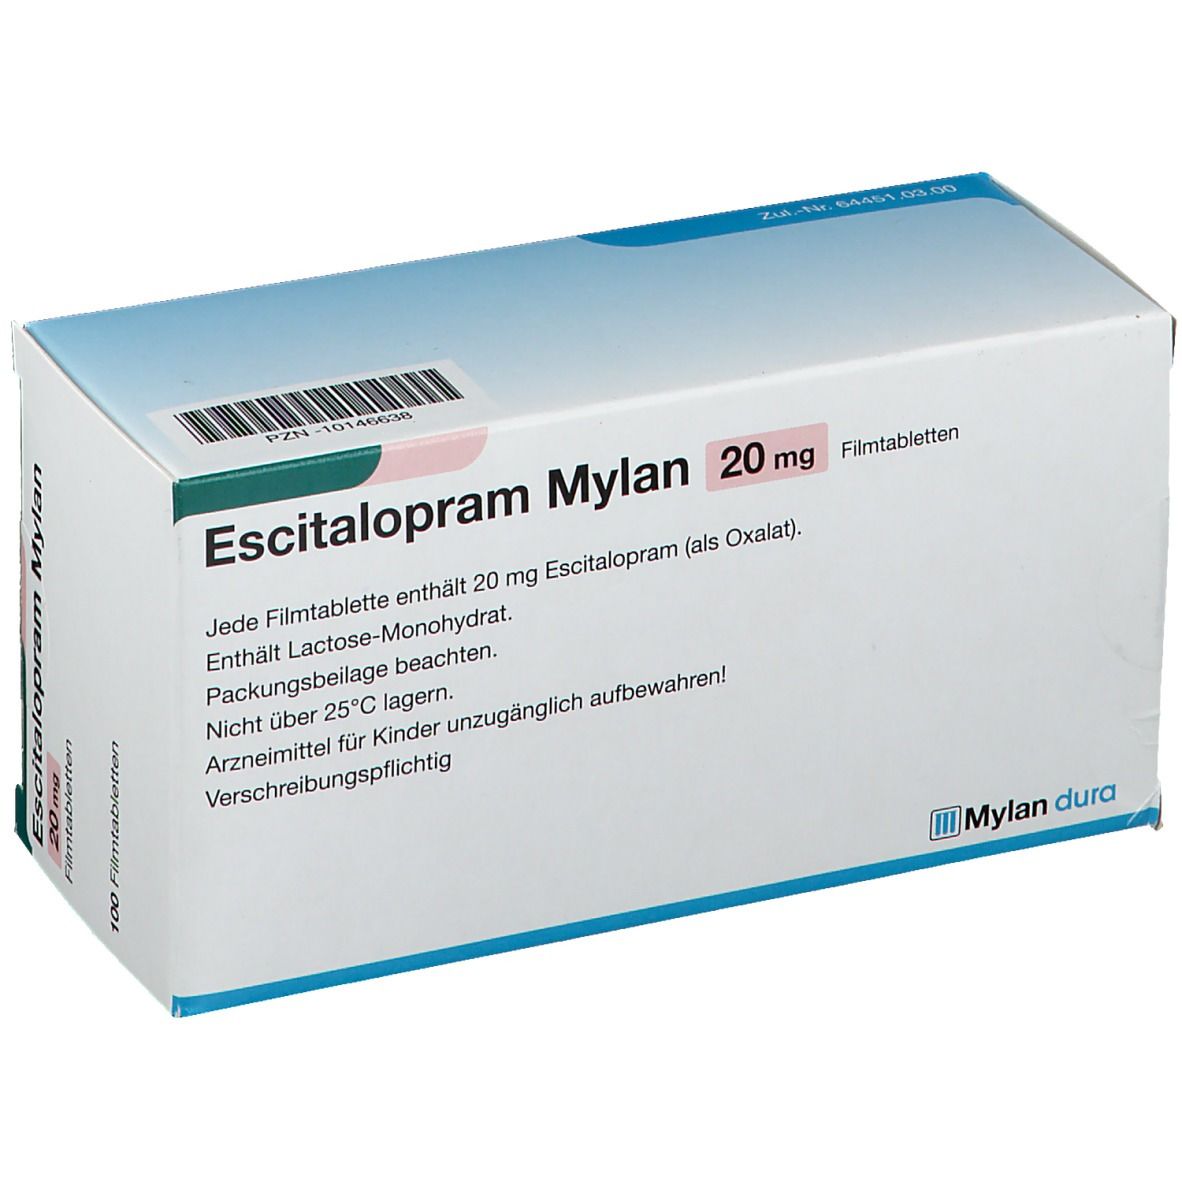 Escitalopram Mylan 20 mg